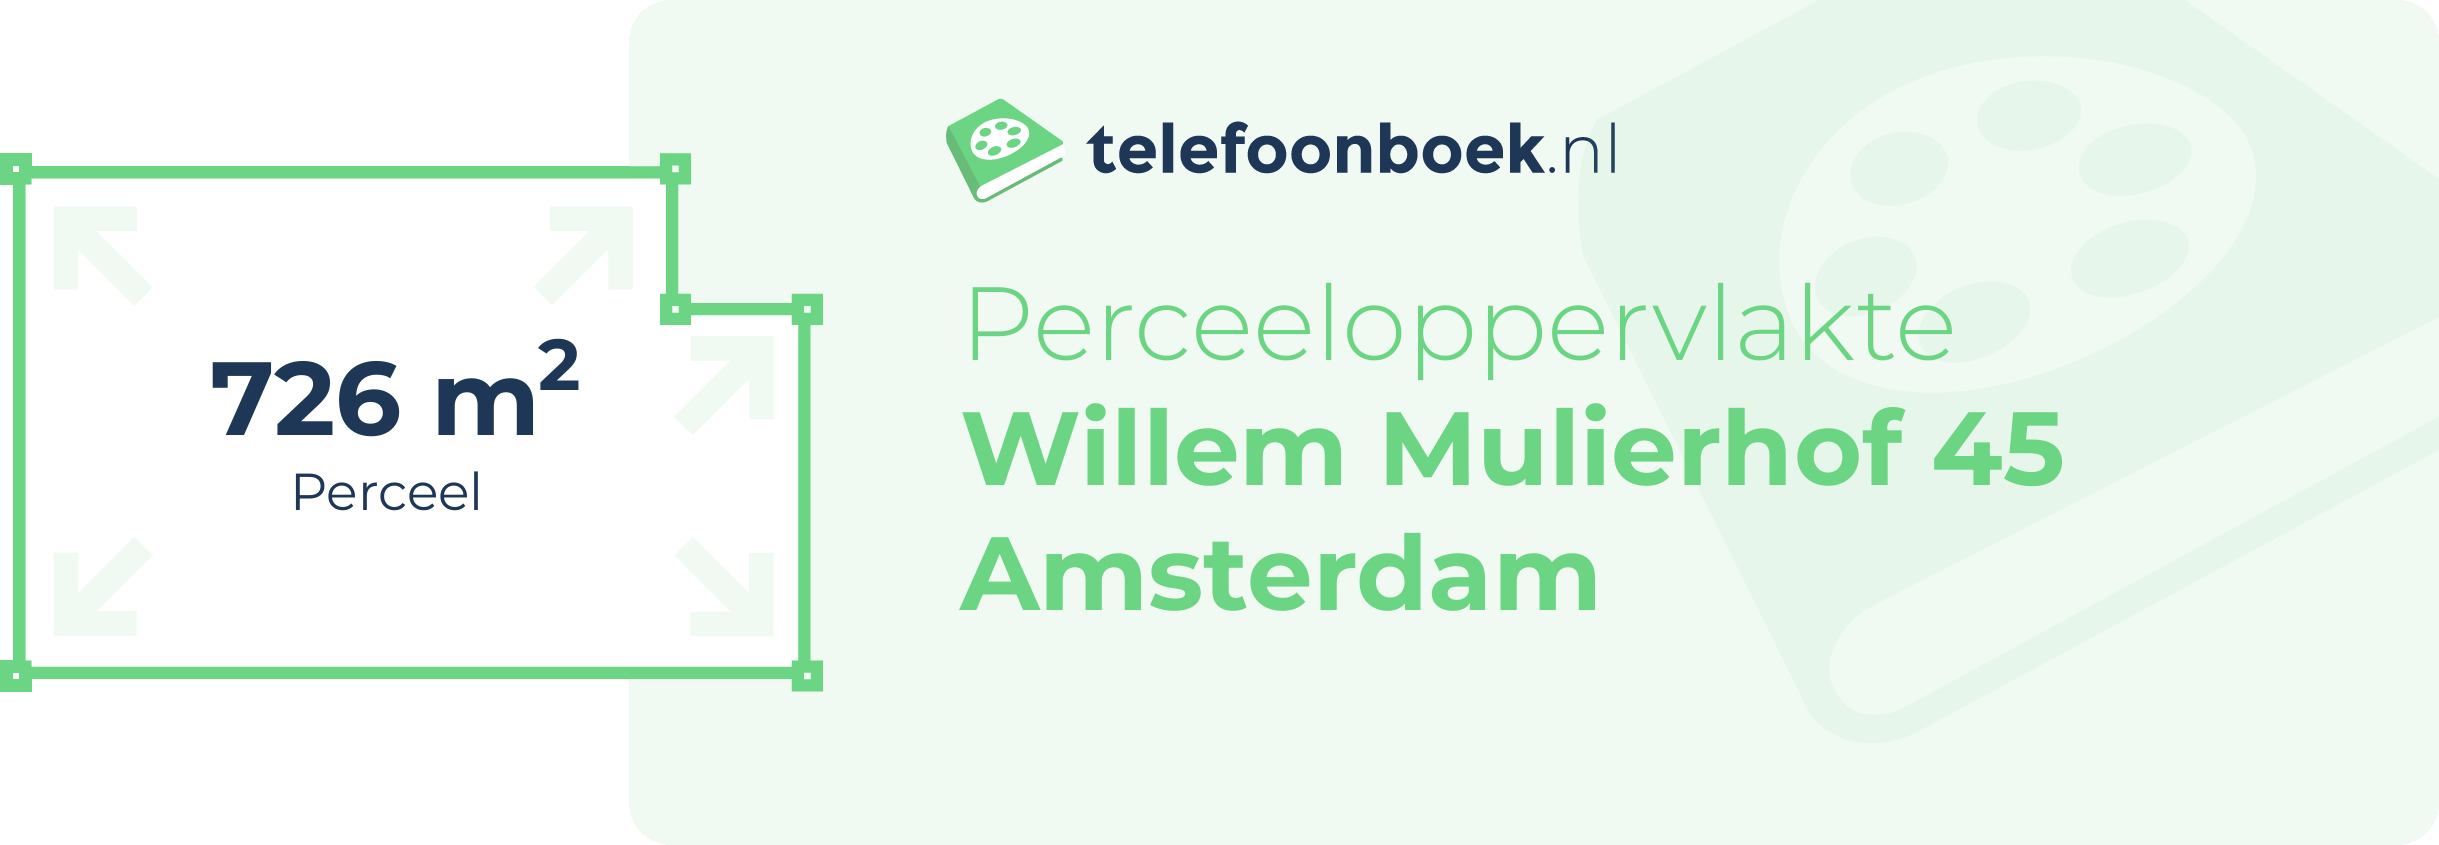 Perceeloppervlakte Willem Mulierhof 45 Amsterdam